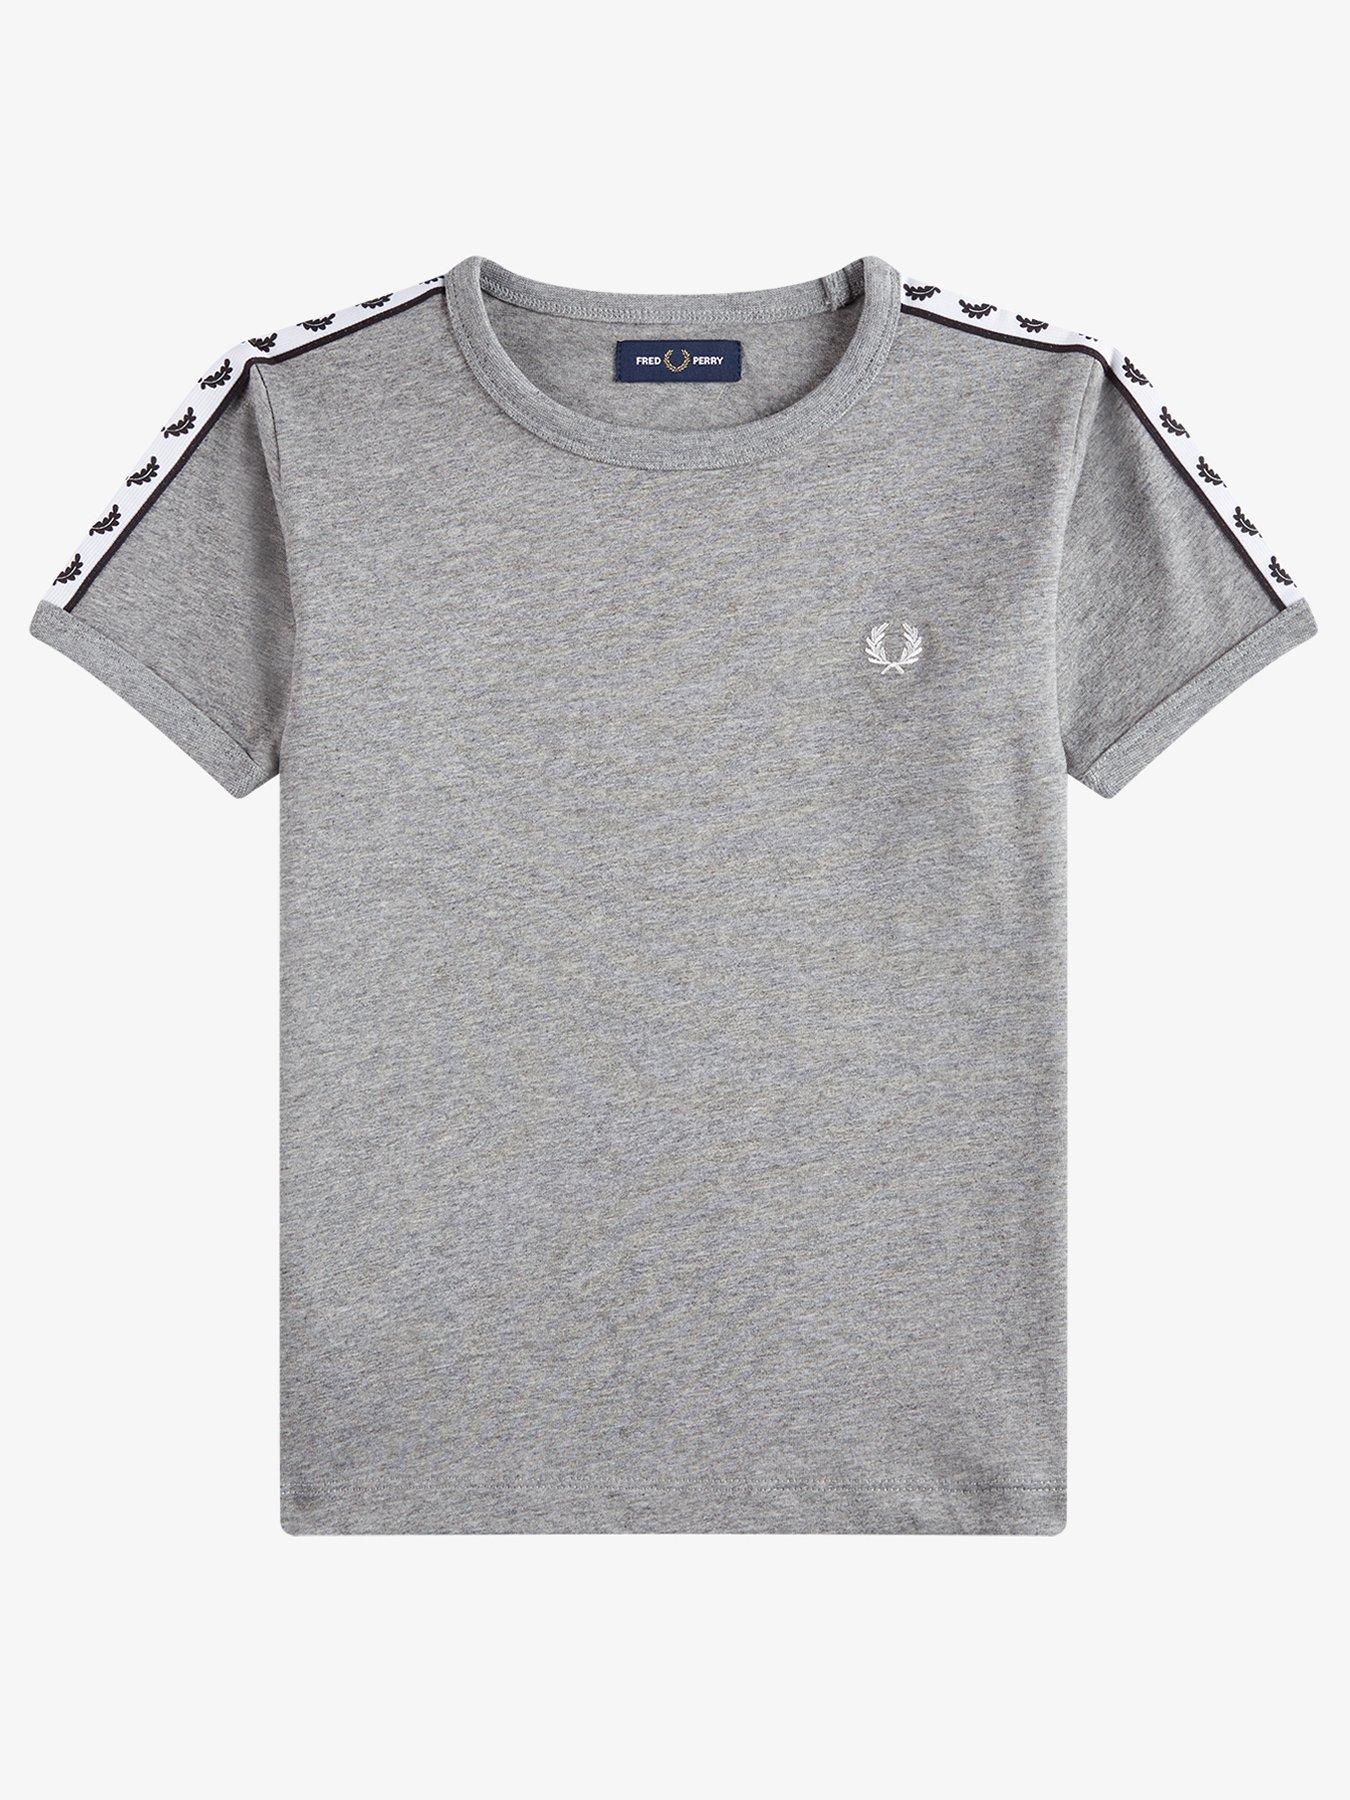 Kids Boys Taped Ringer T-shirt - Grey Marl